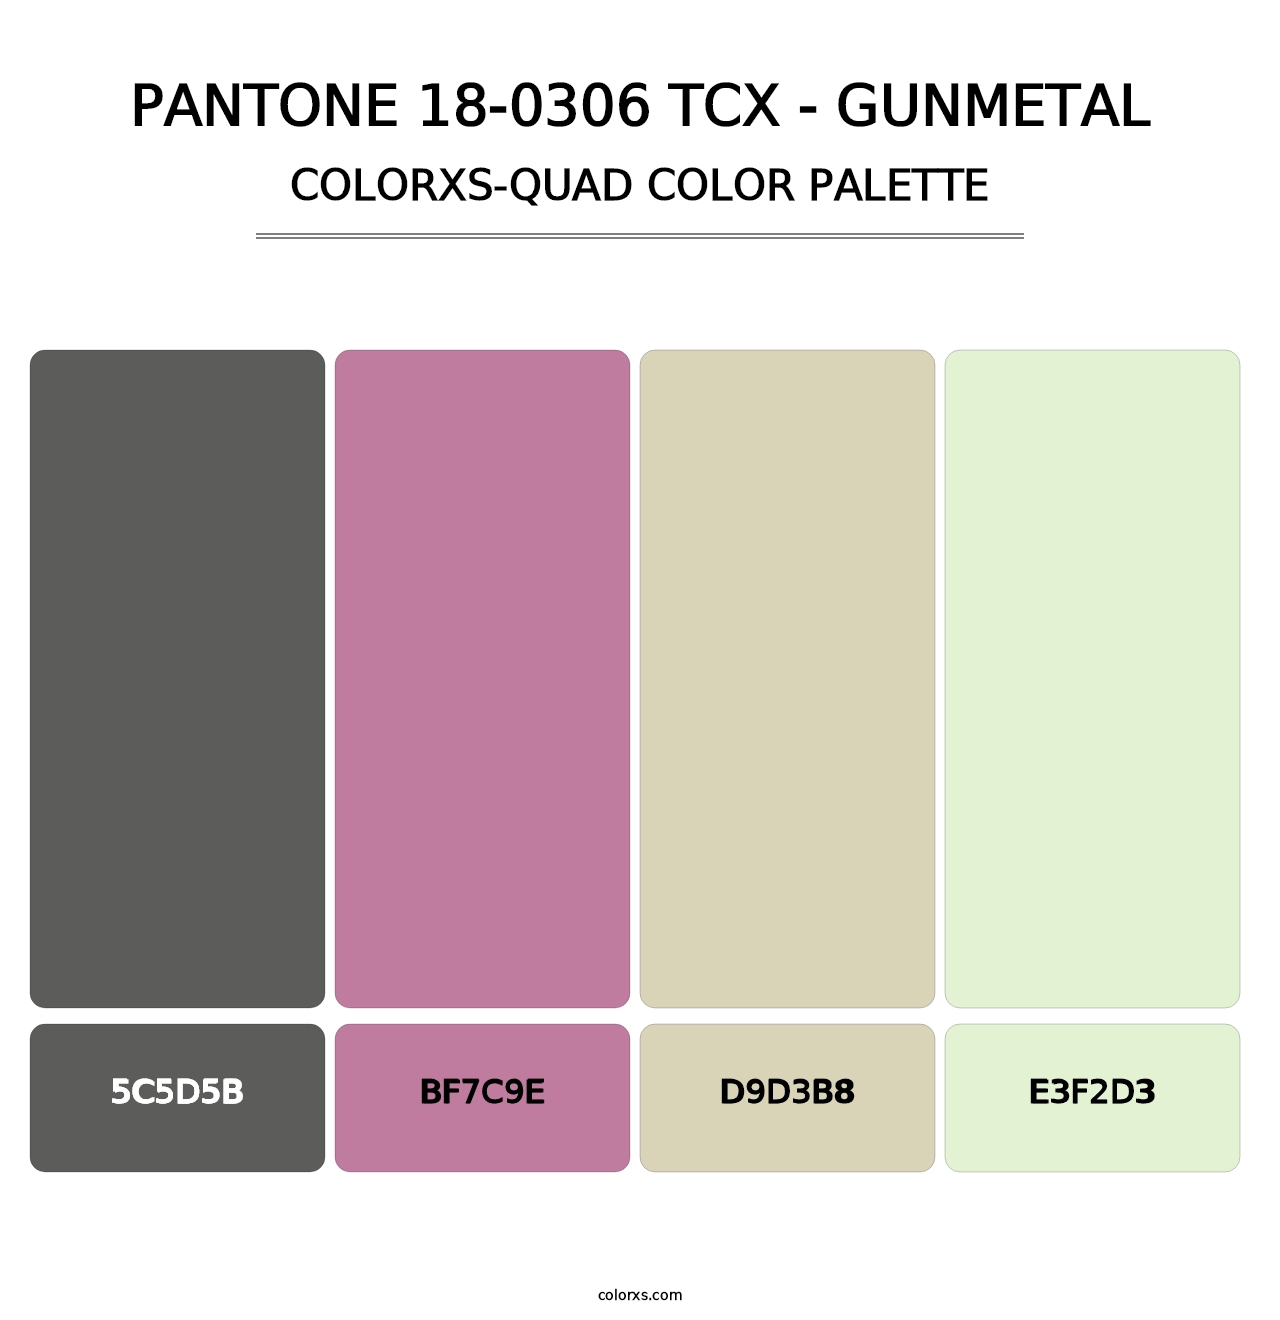 PANTONE 18-0306 TCX - Gunmetal - Colorxs Quad Palette